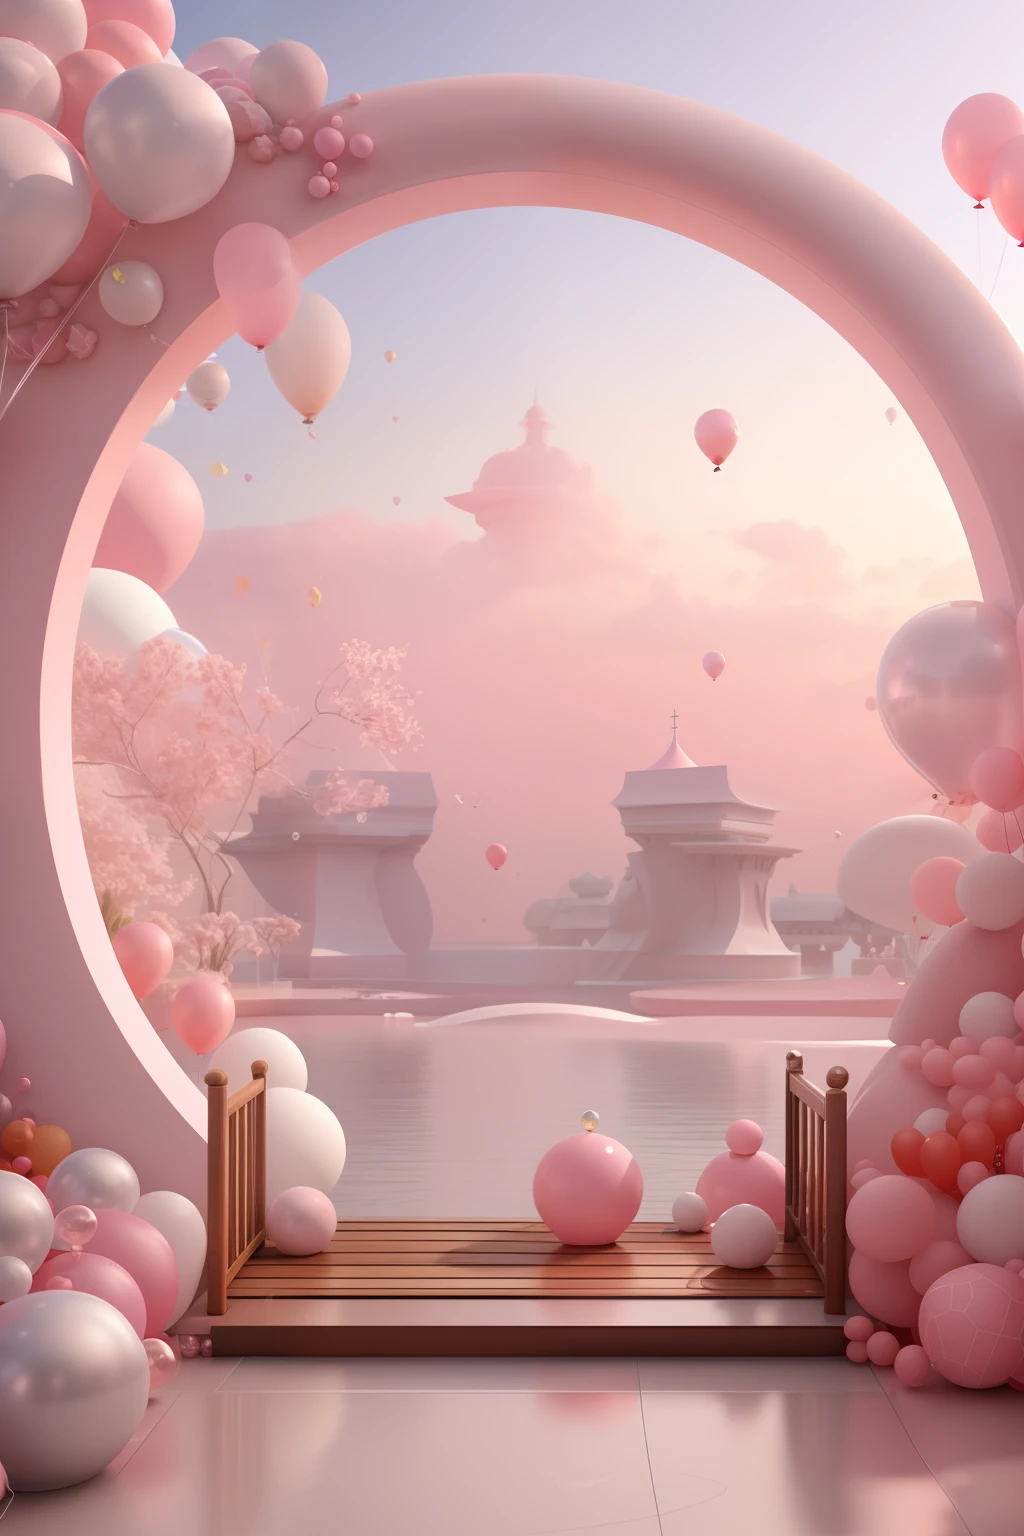 There is a pink and white arch，With balloons and benches, estilo zen rosa, paisagem cor-de-rosa, cenas de sonho, olhando para um oceano cor-de-rosa, 3 d render stylized, 3d rendering stylized, surreal 3 d render, bubbly scenery, Paisagem de sonho surreal, 3 d stylize scene, stylized as a 3d rendering, atmosfera sonhadora e drama